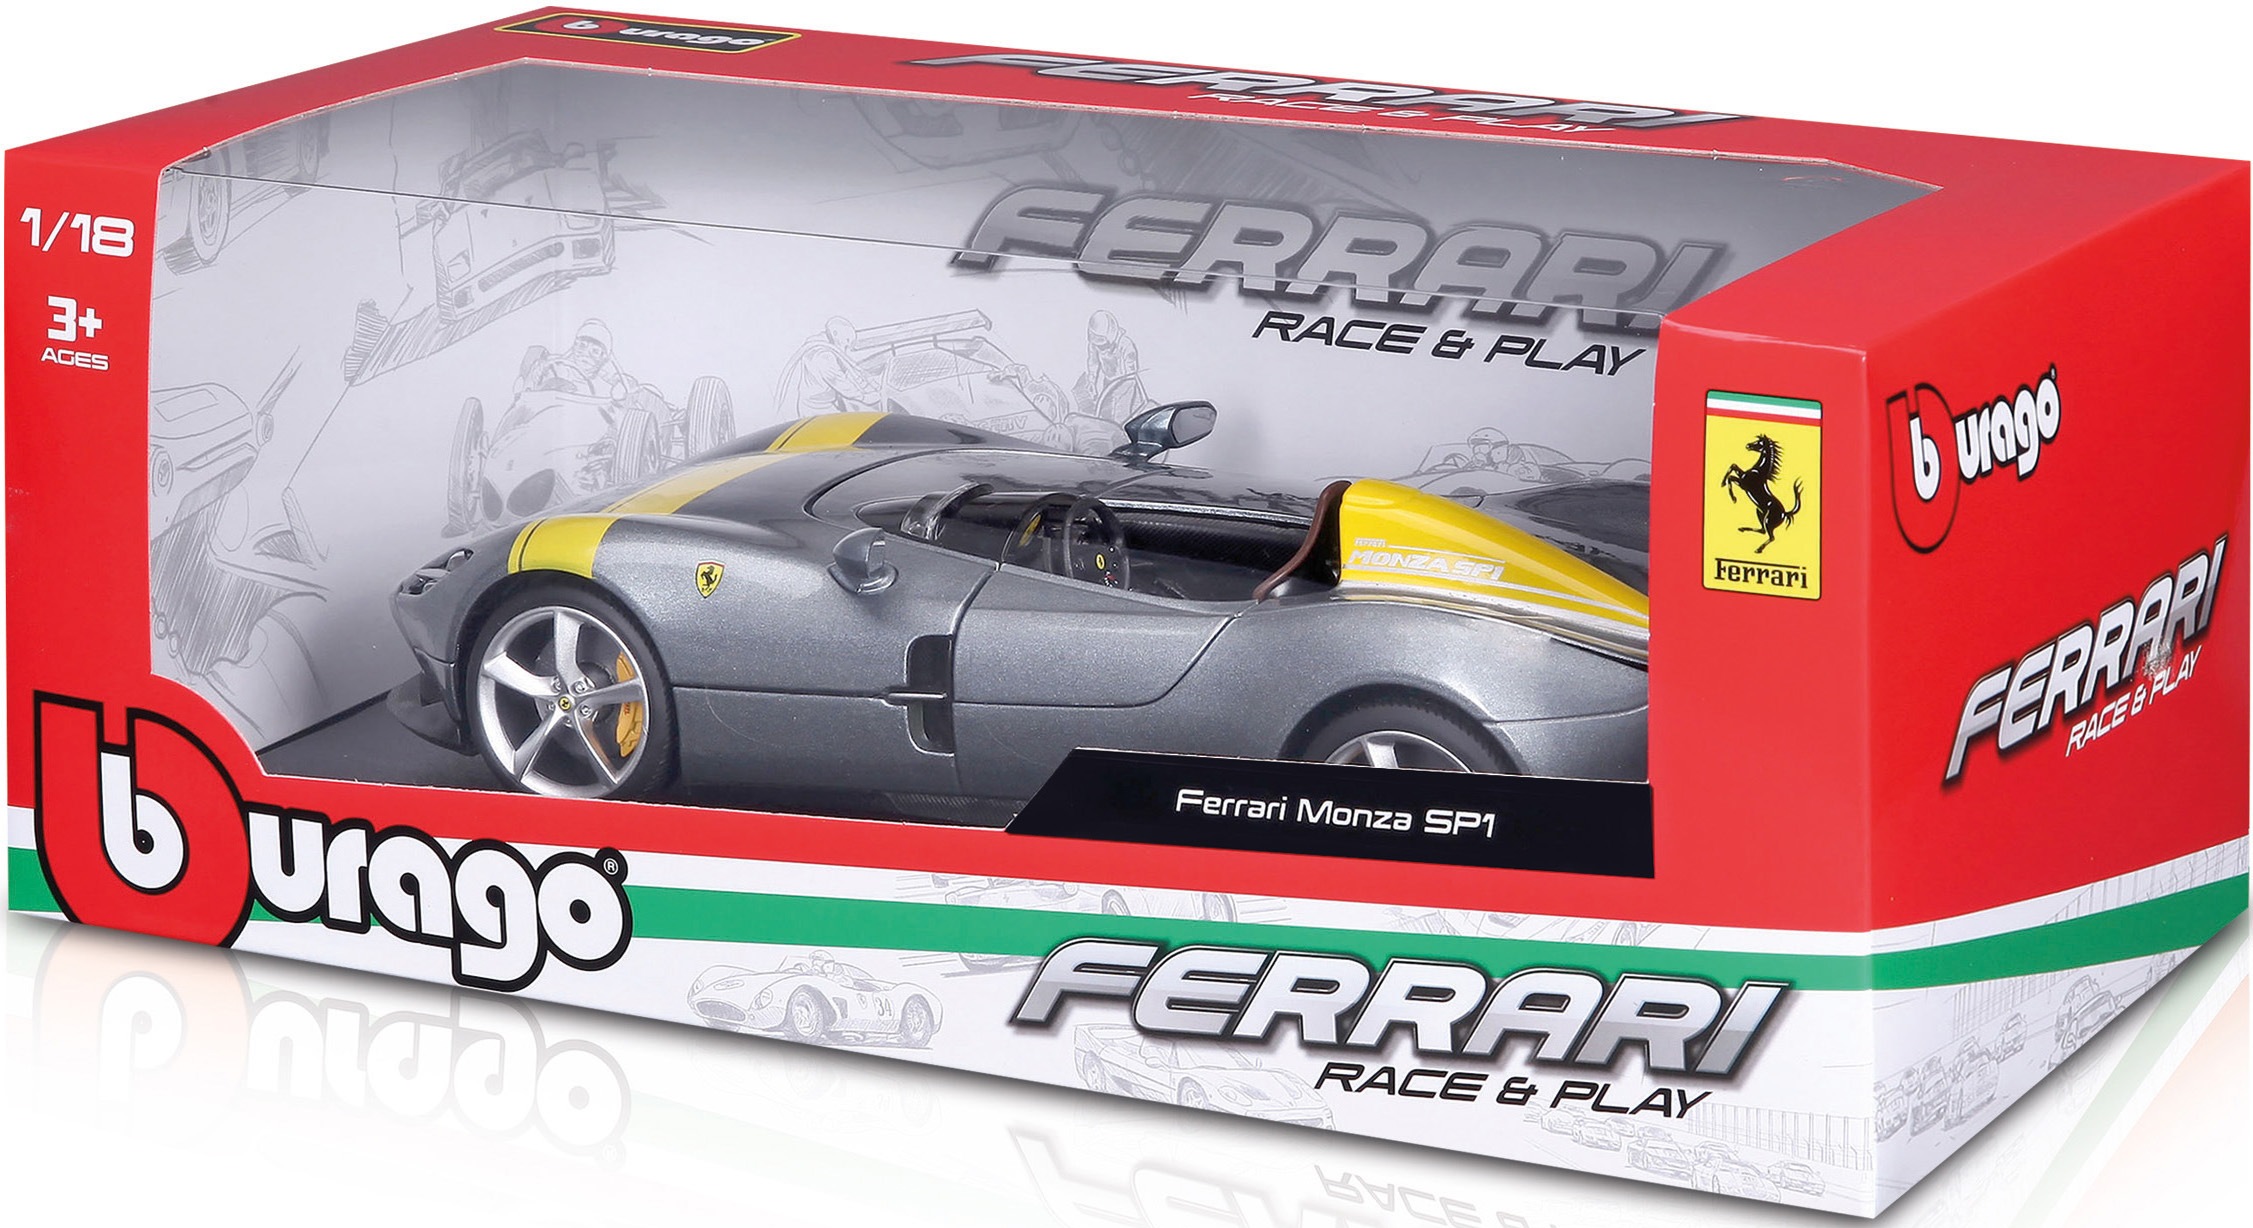 Bburago Sammlerauto »Ferrari Monza SP1«, 1:18